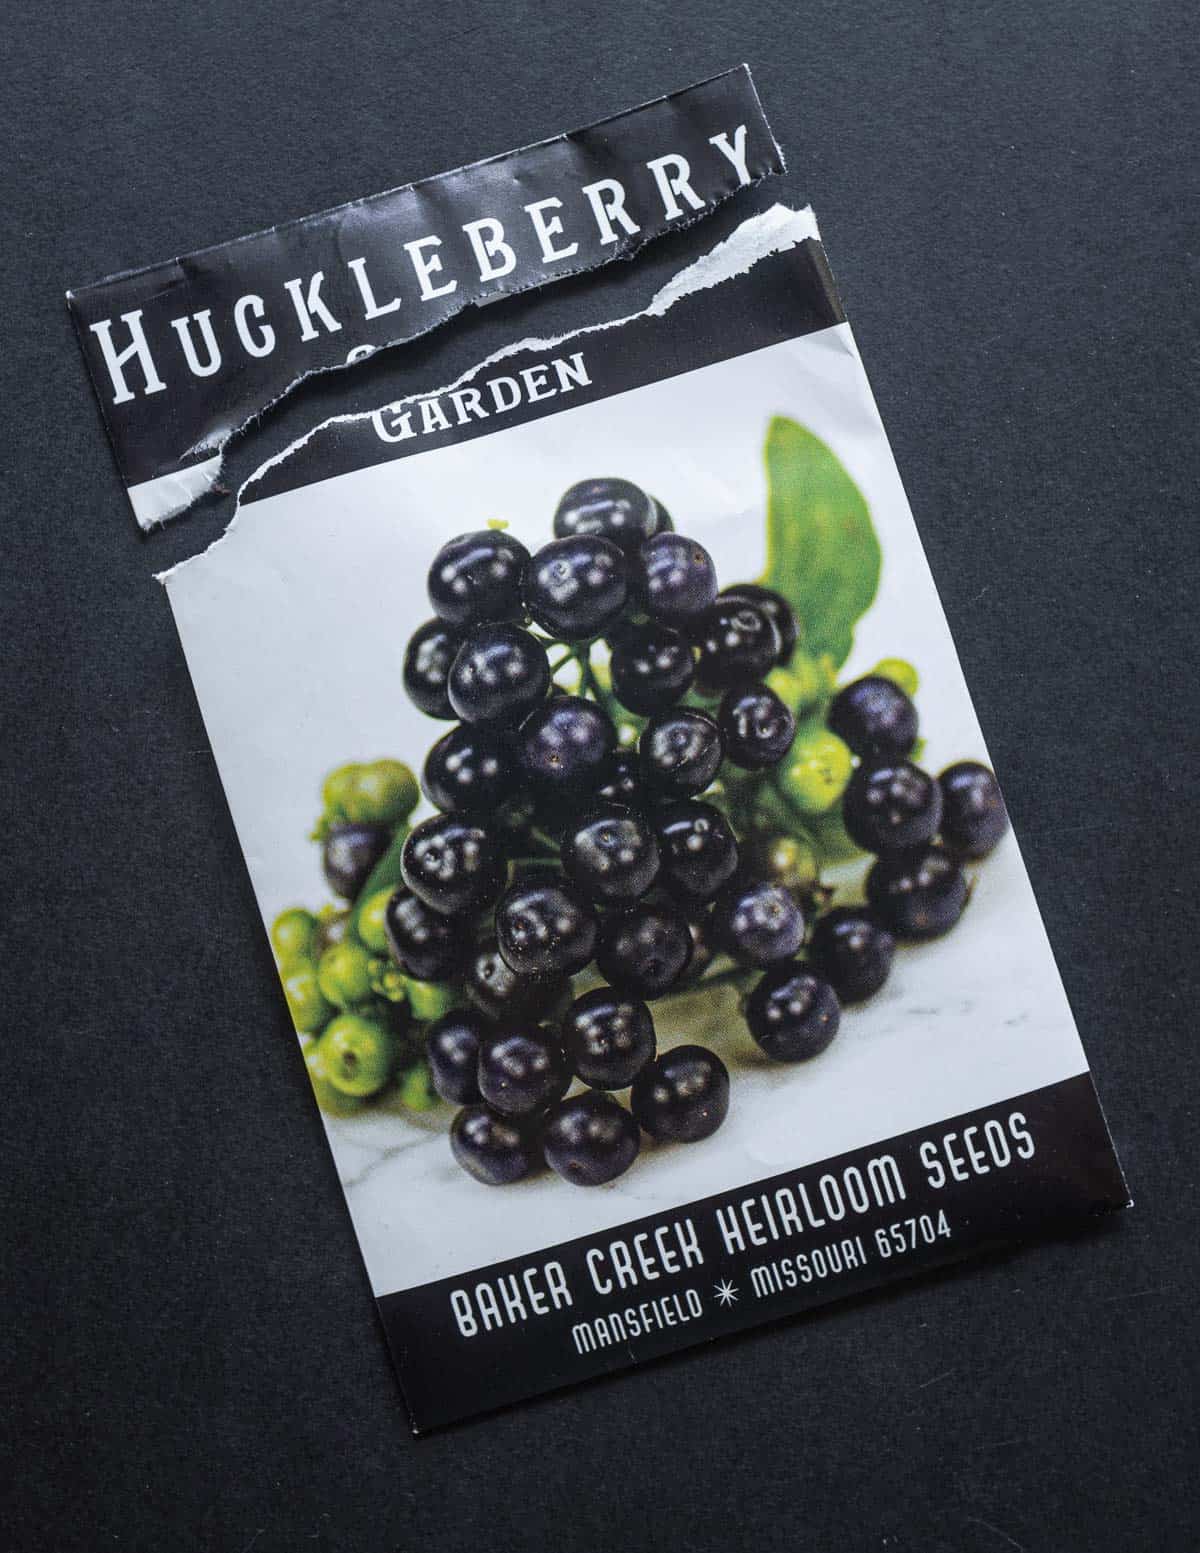 A bag of black nightshade or garden huckleberry seeds.